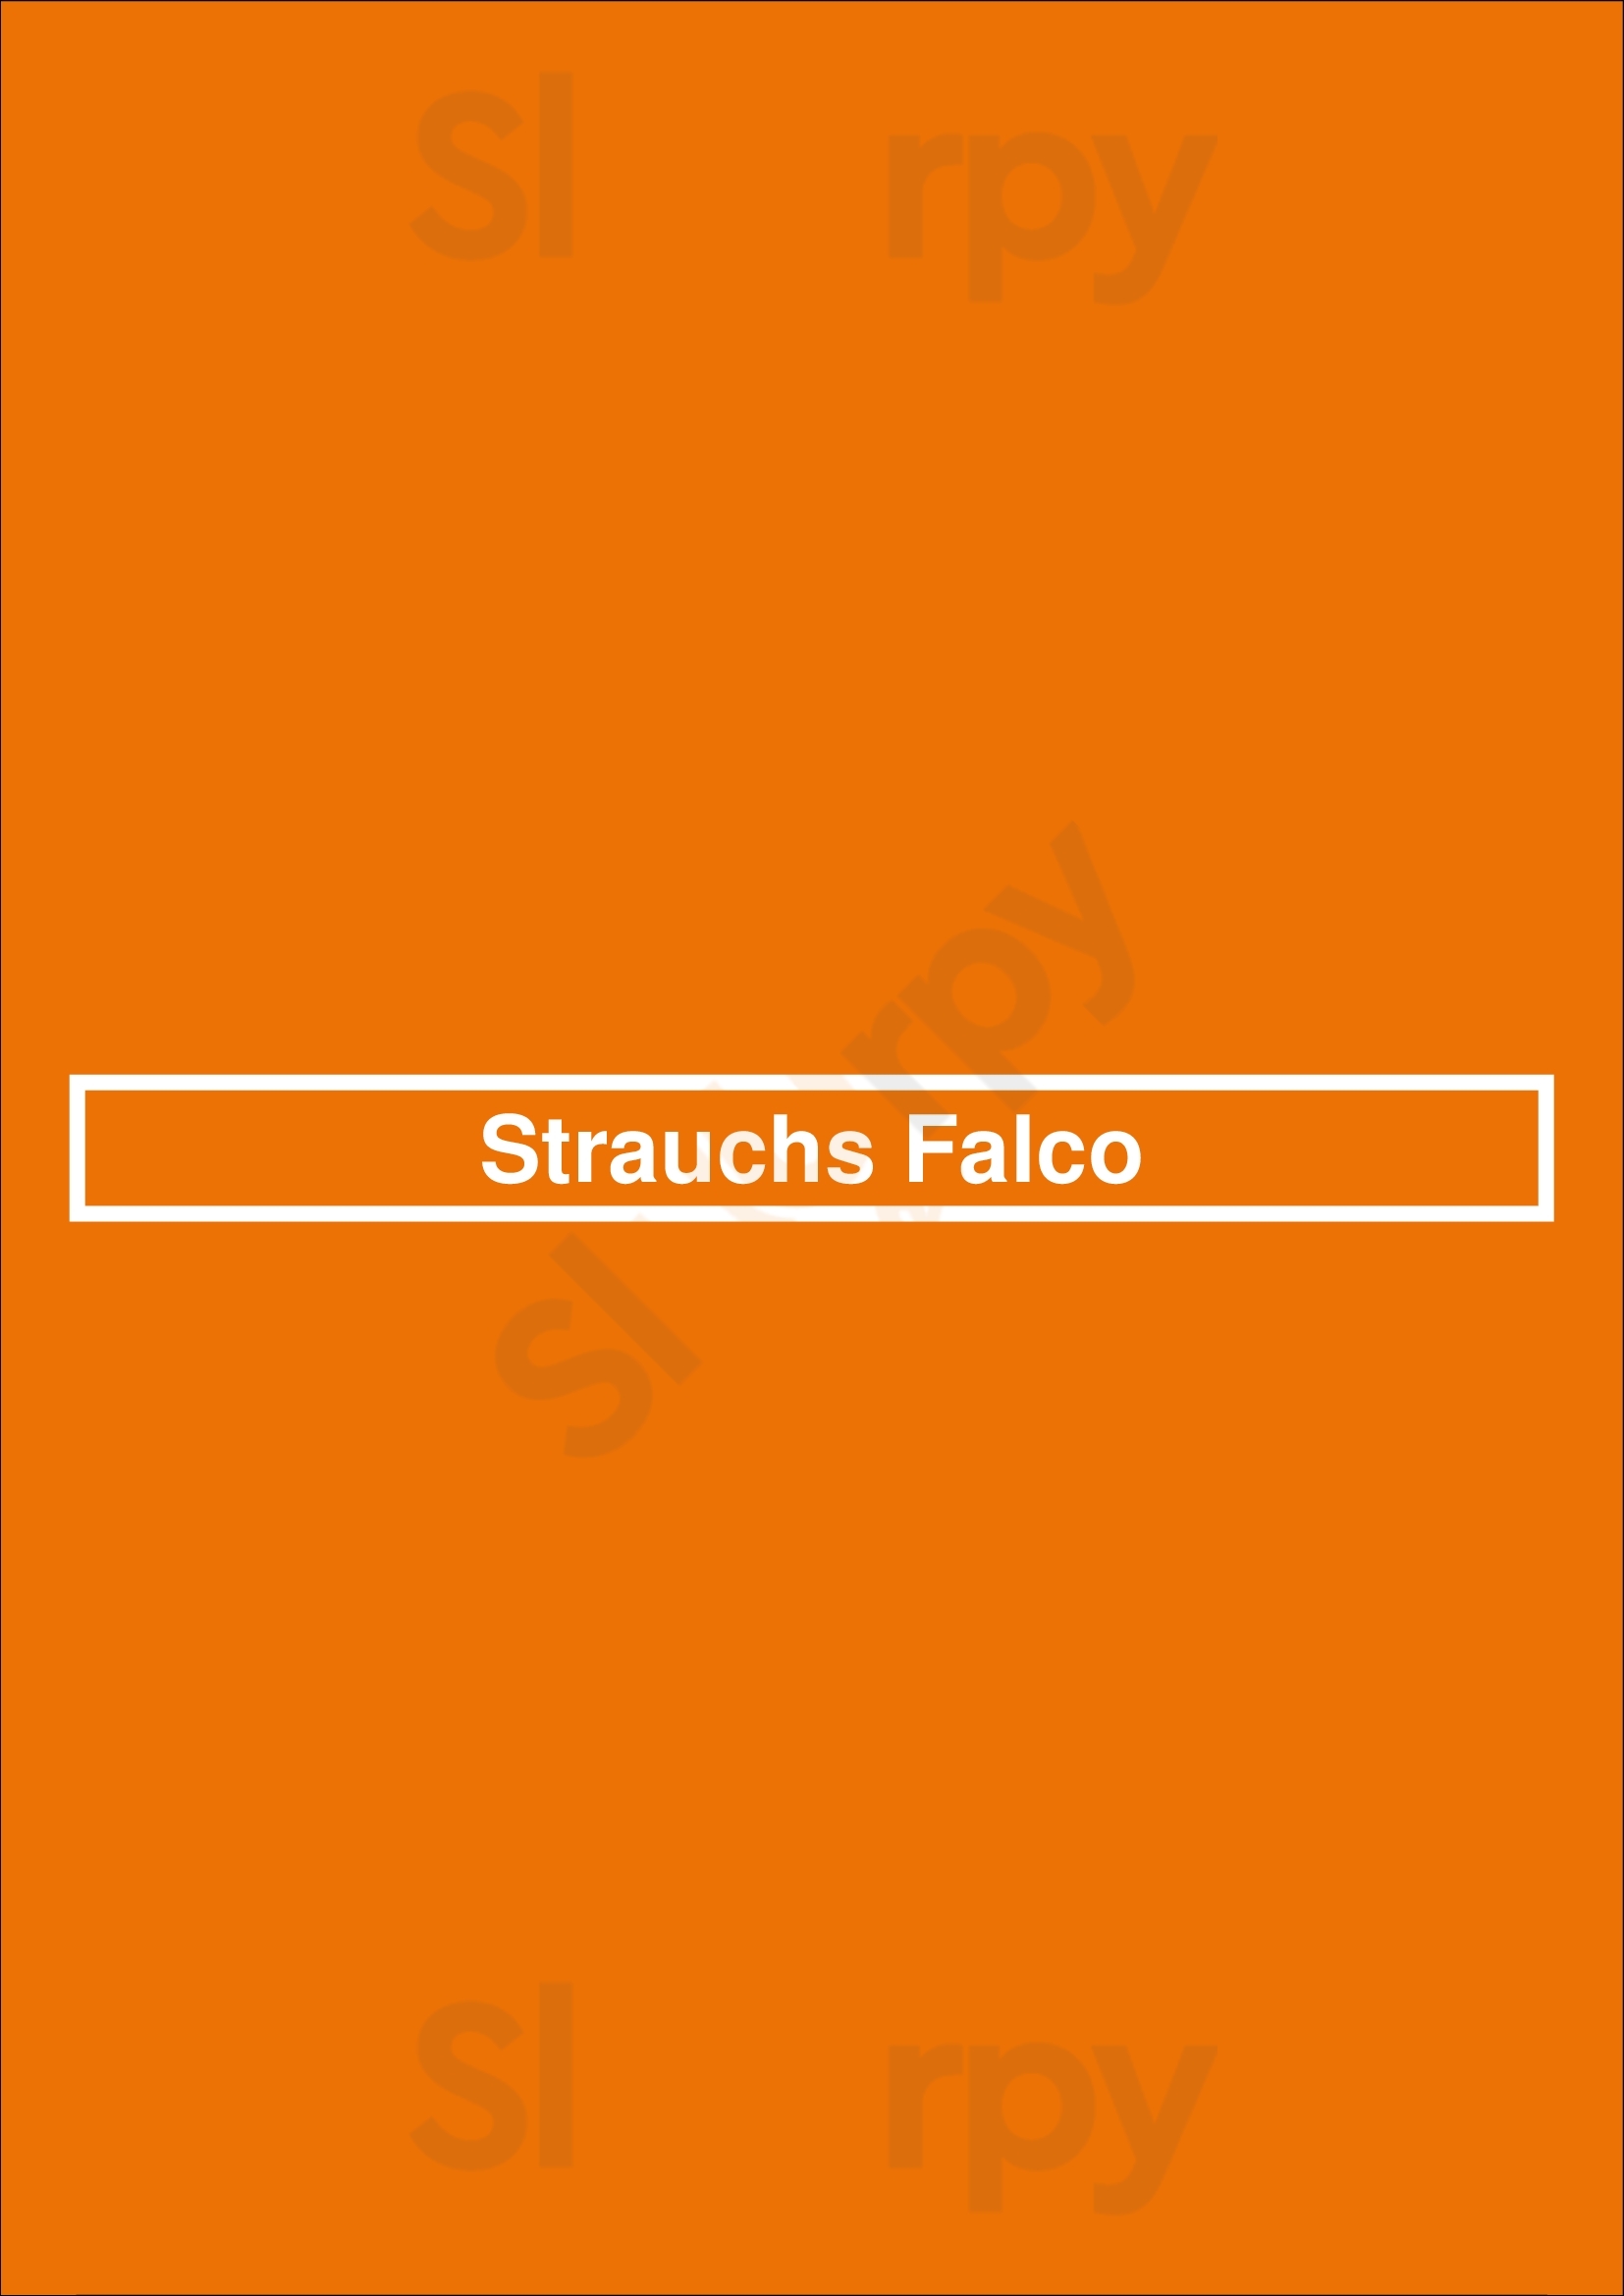 Strauchs Falco Hamburg Menu - 1